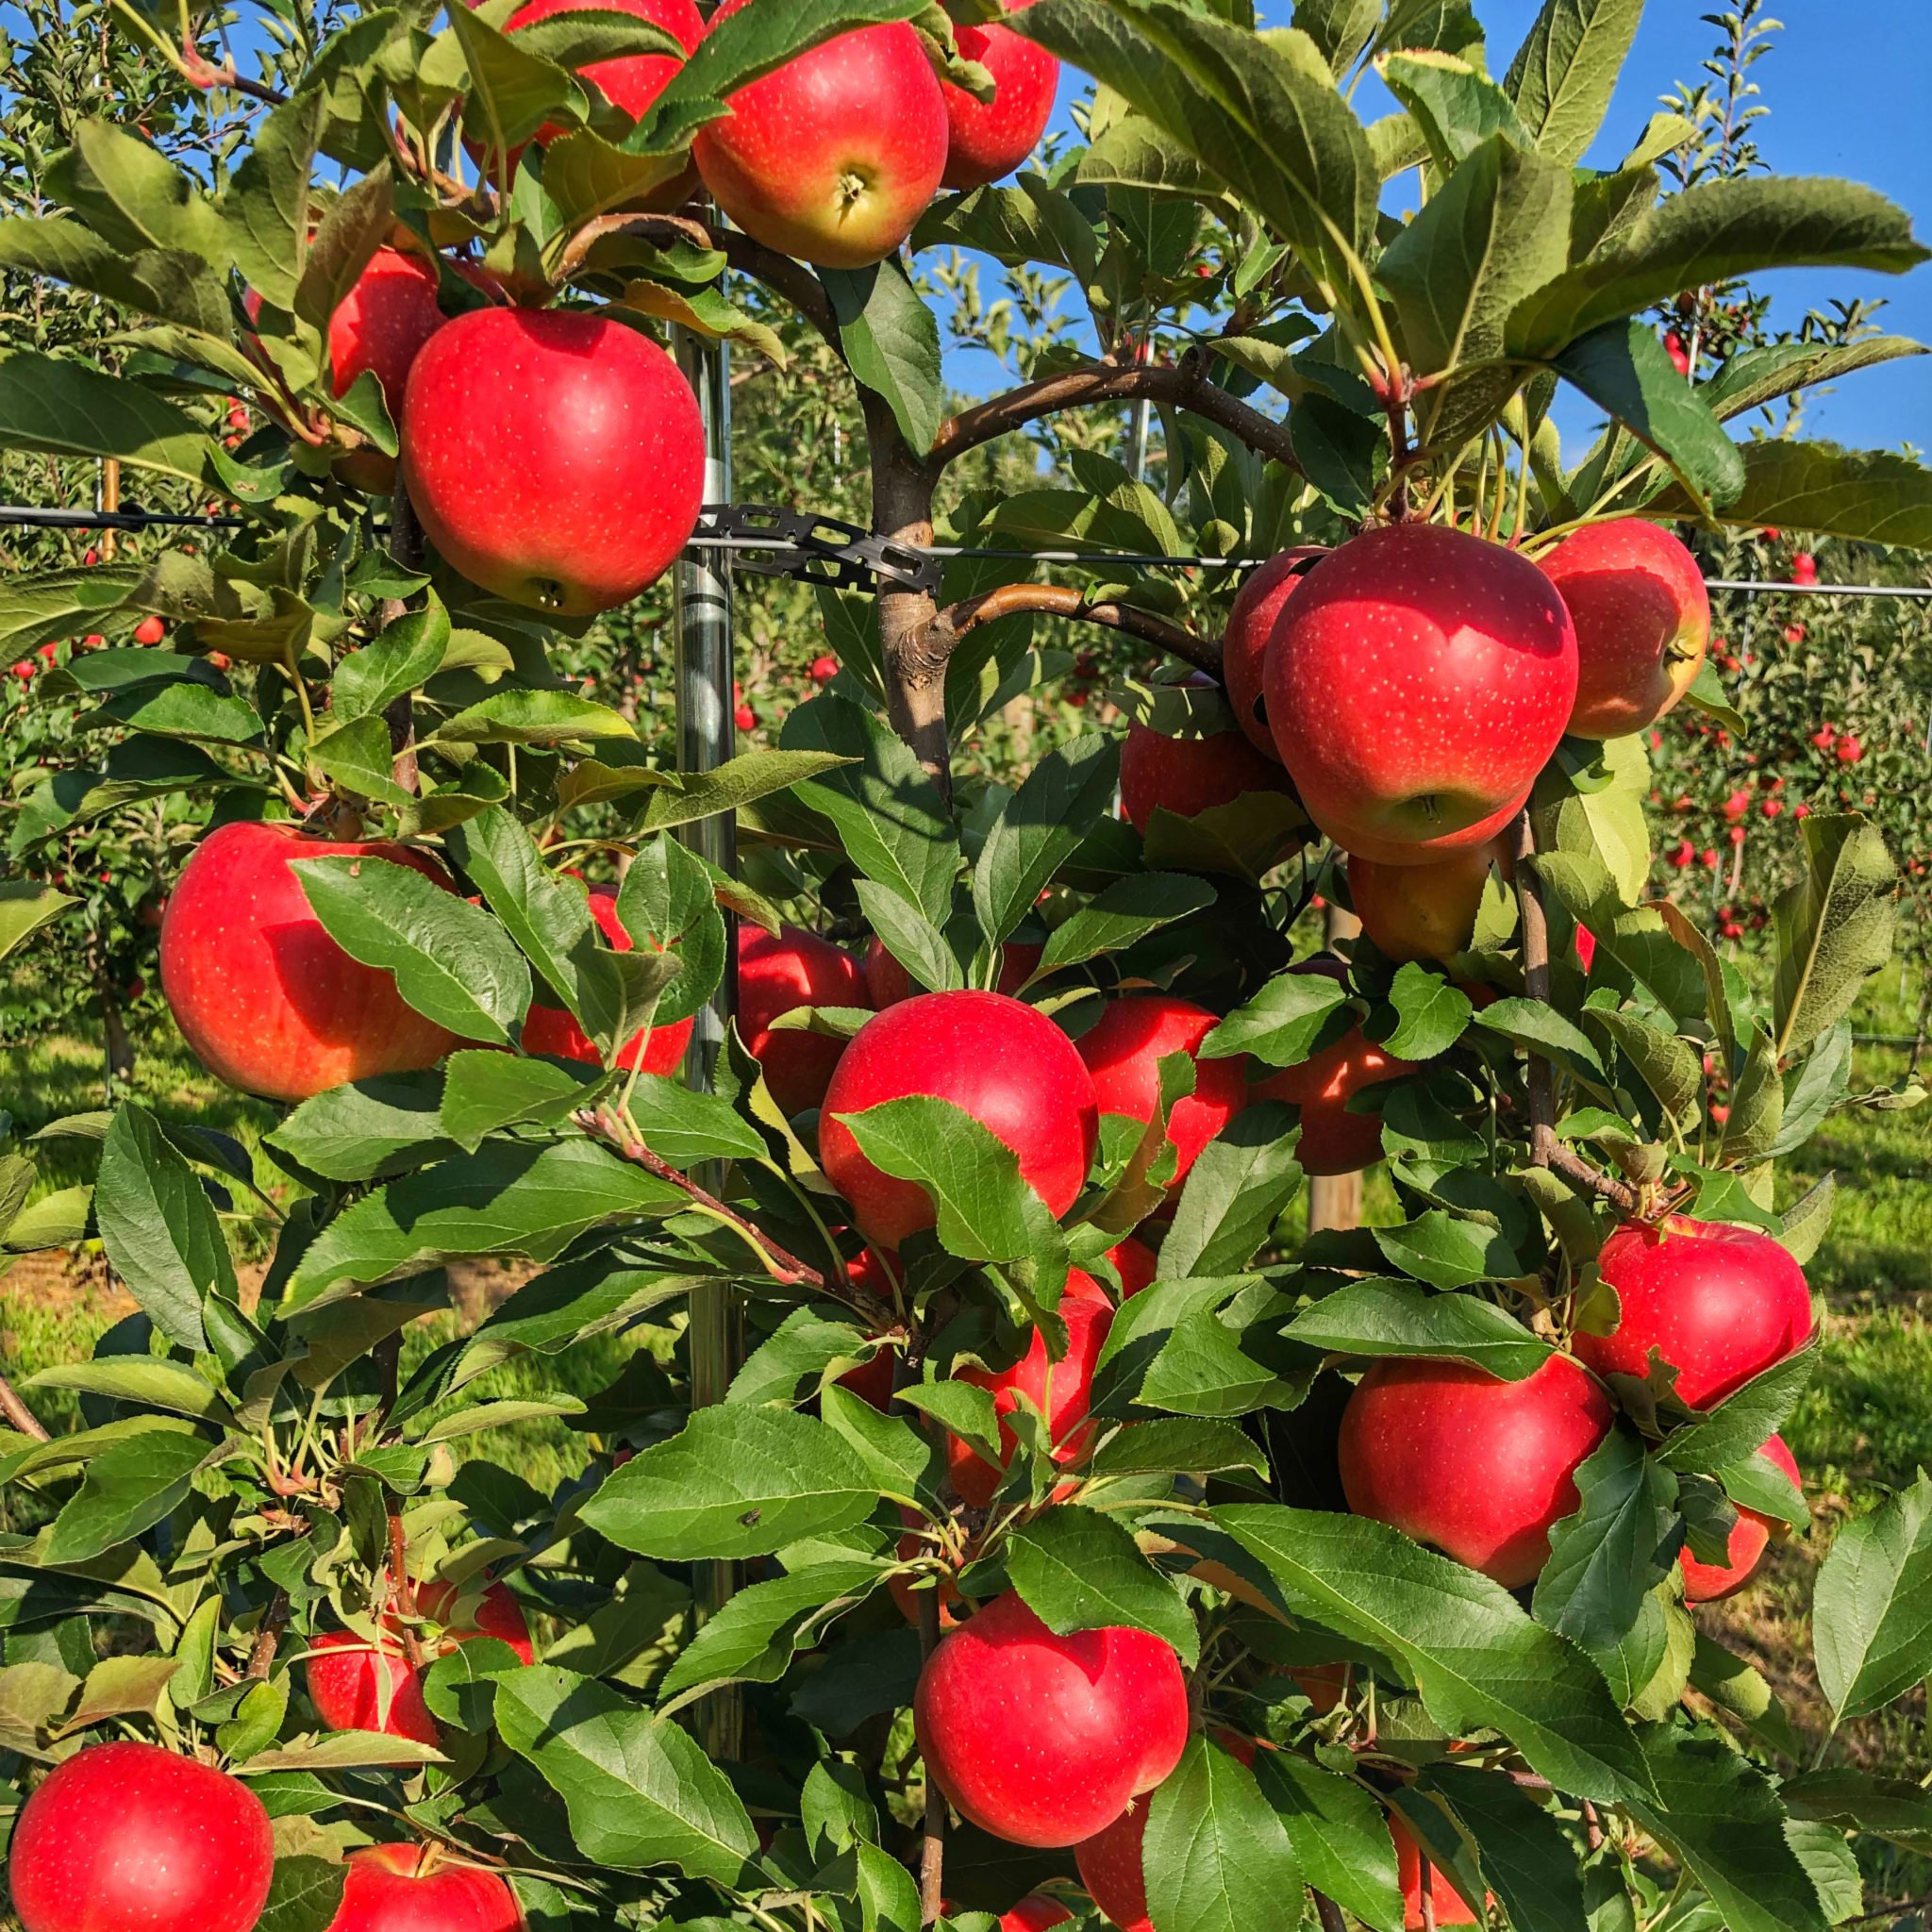 Tis the Season For Fresh Picked Apples!